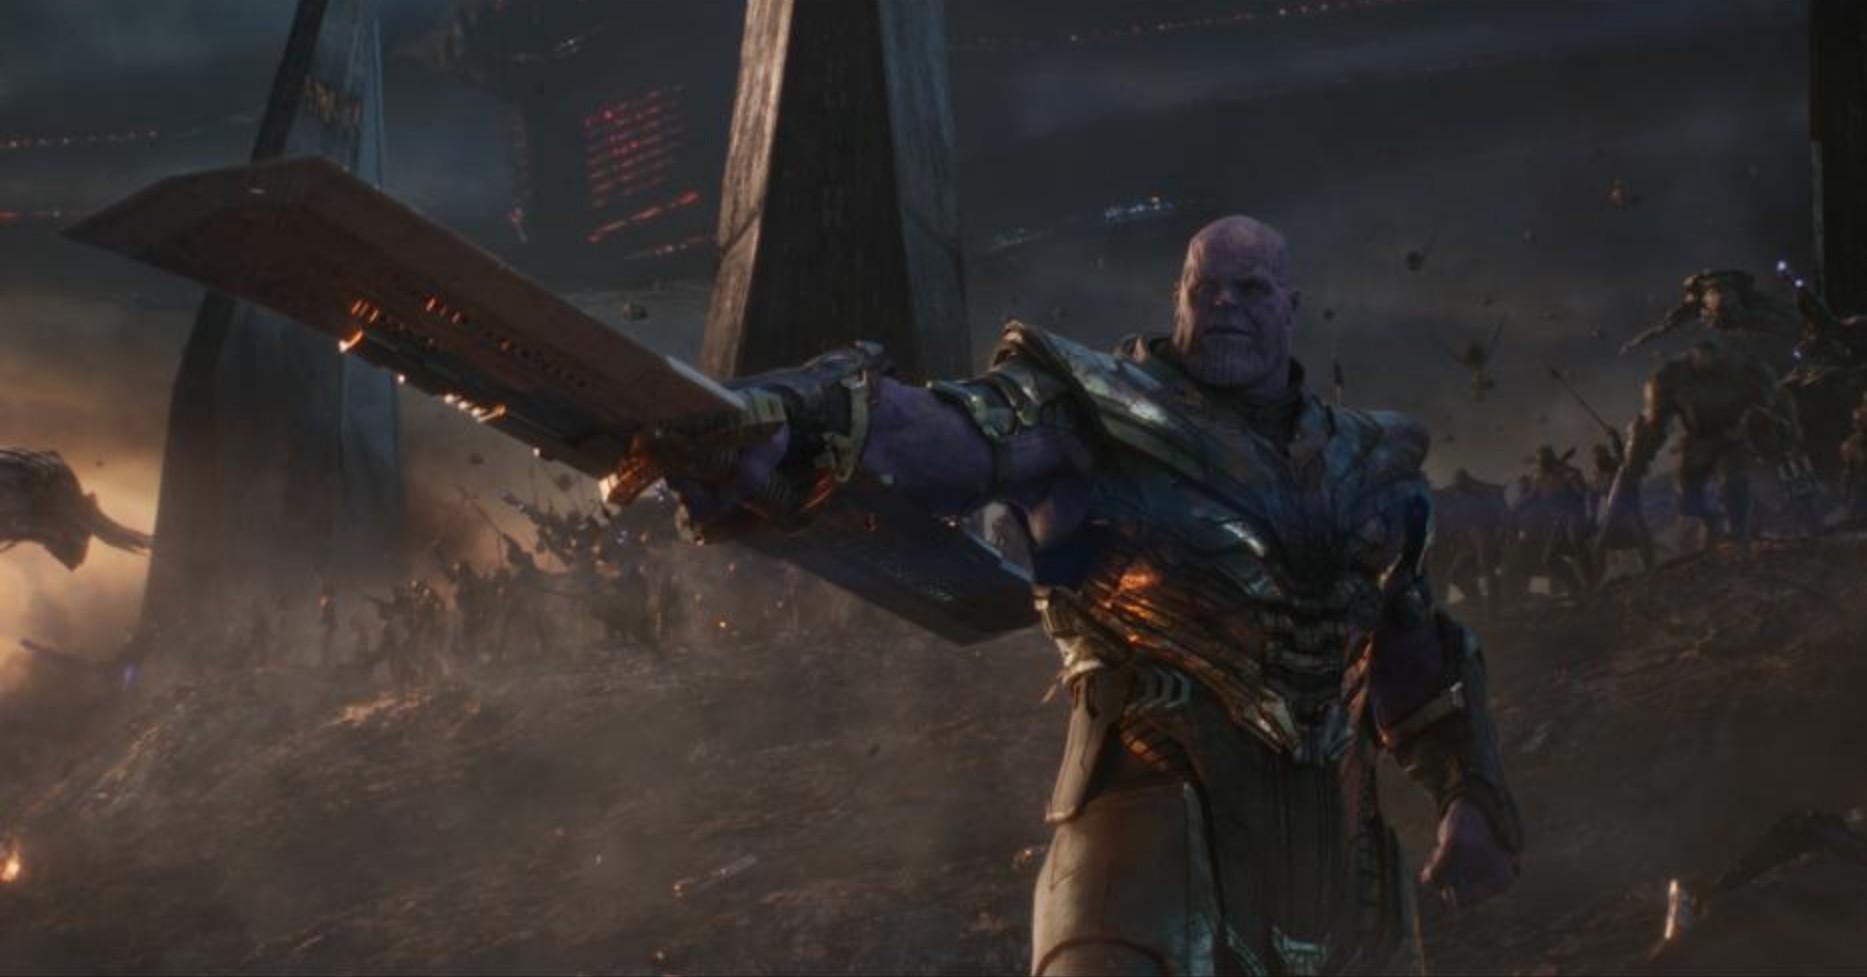 Avengers: Endgame HD Ending Image Highlight the Big Battle